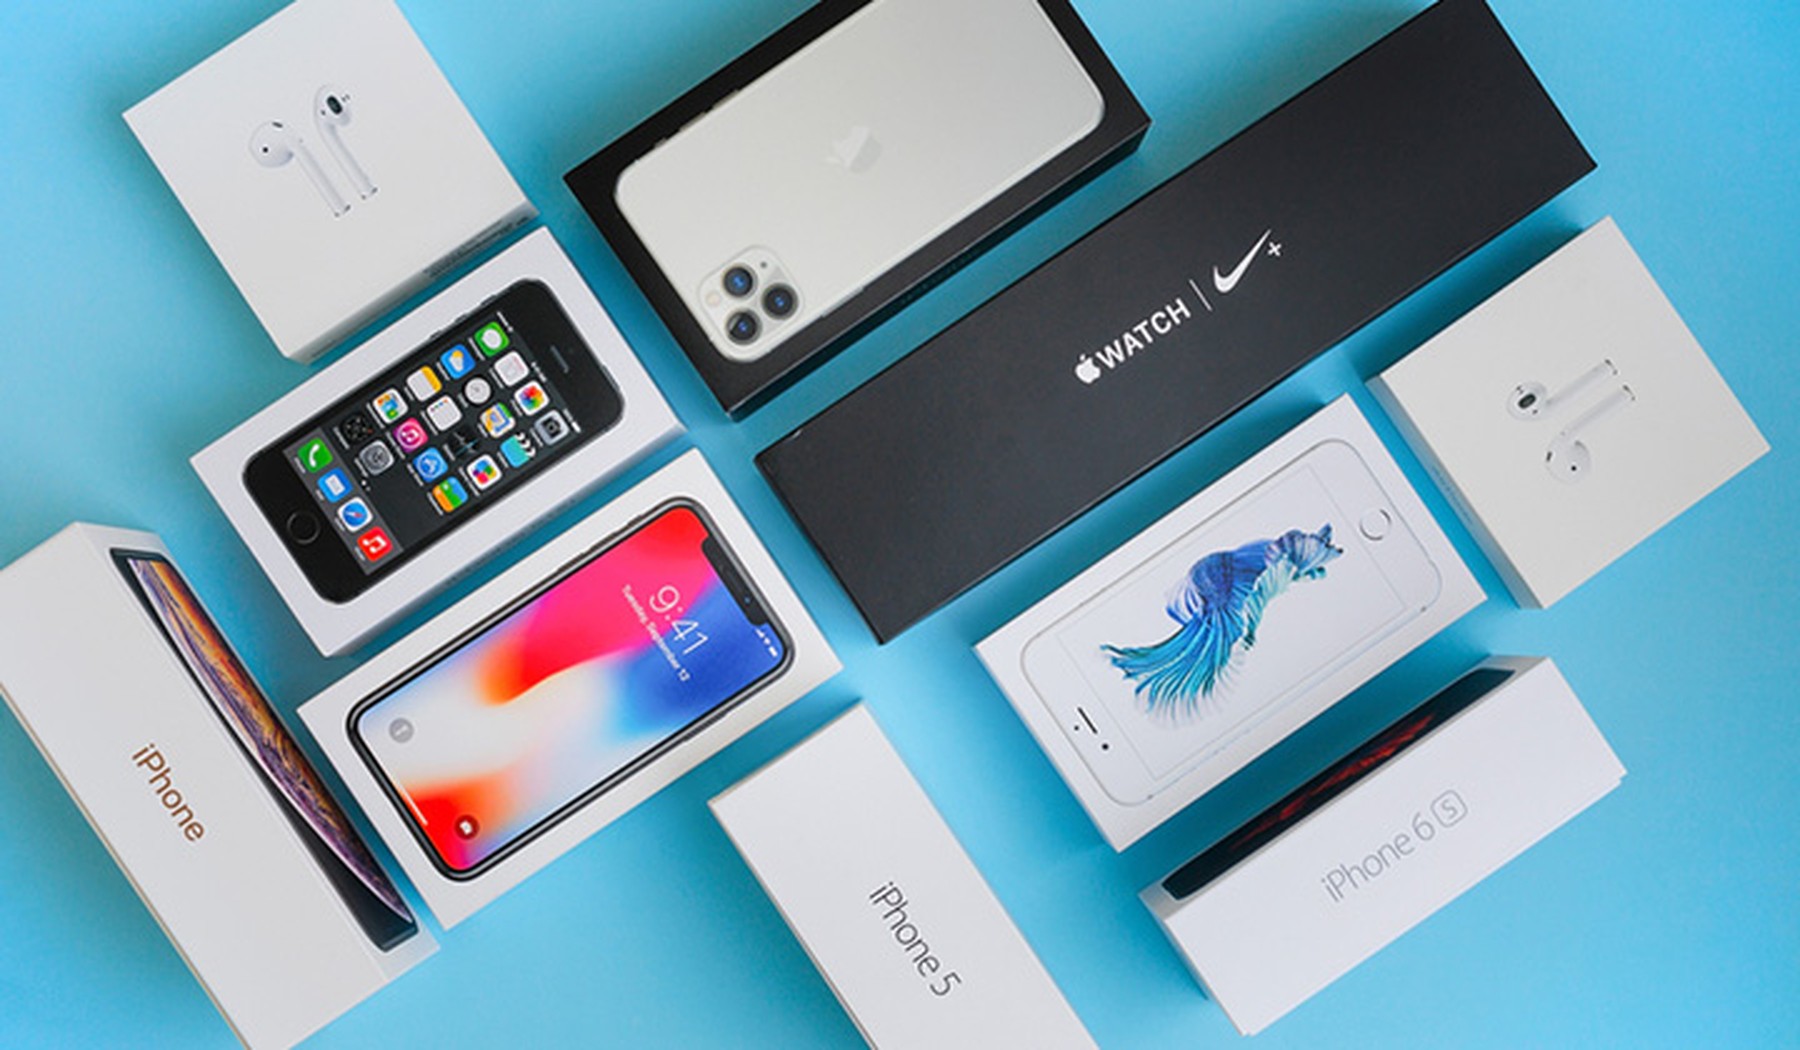 Productos apple en sus cajas: iphone, airpods, iPad